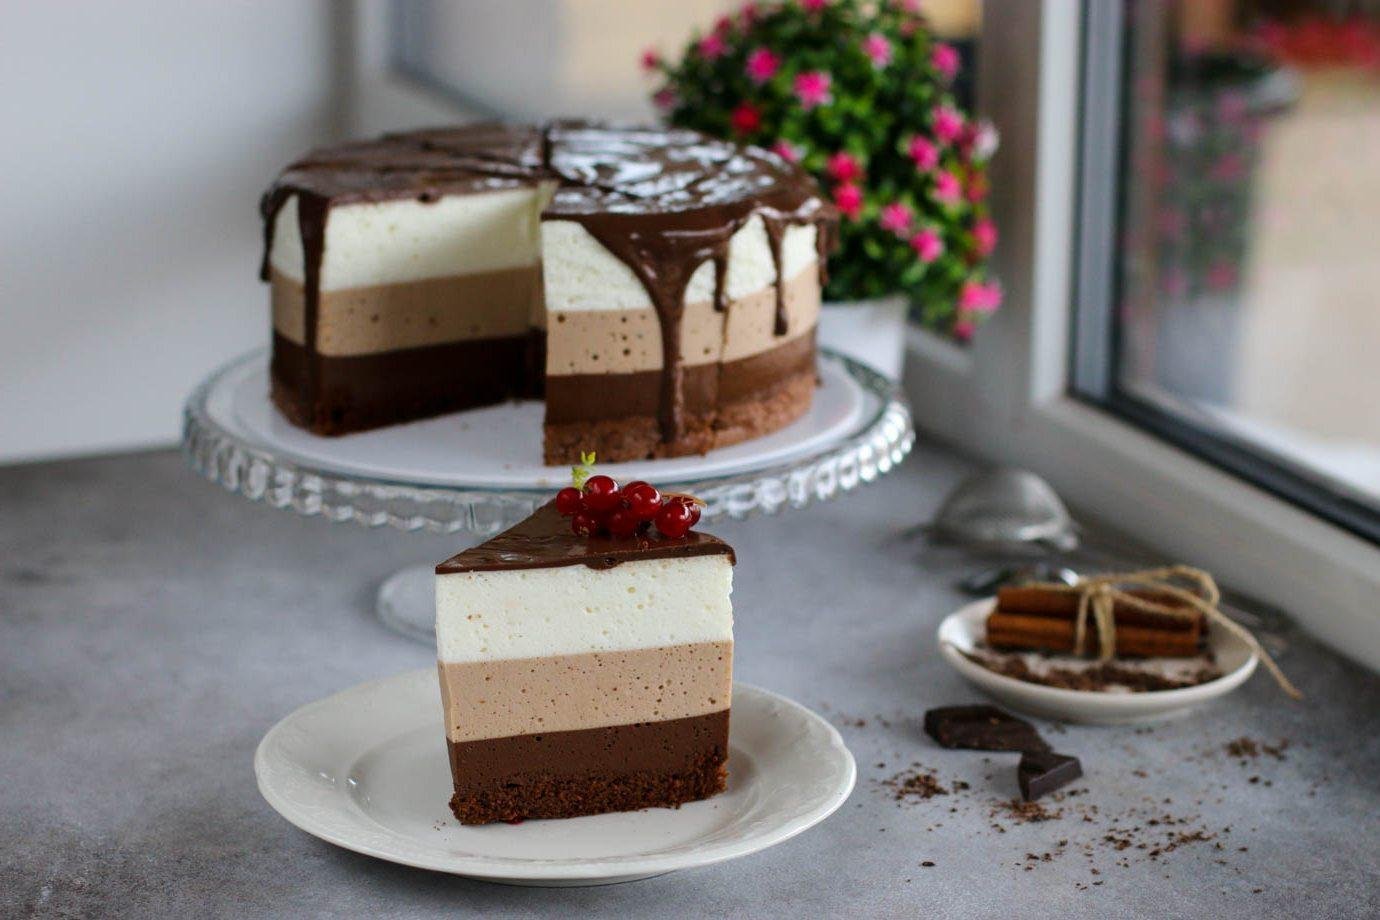 Рецепт торта три шоколада в домашних условиях с фото